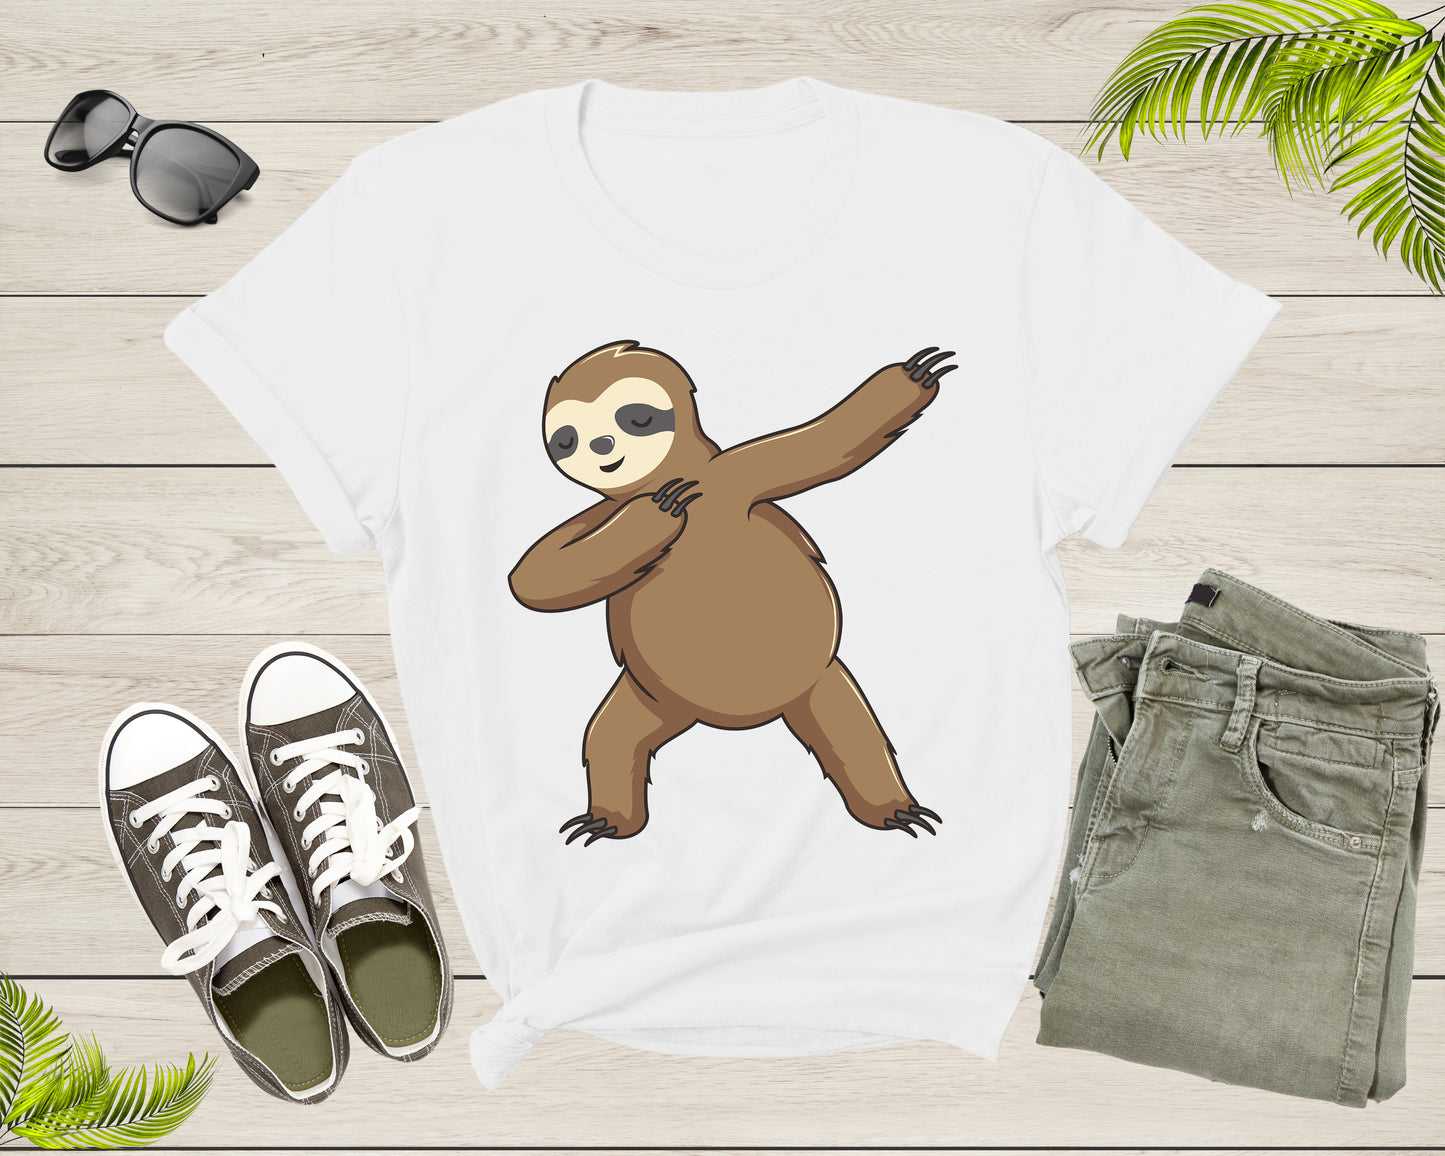 Cool Dabbing Dancing Lazy Sloth for Men Women Kids Boys Girl T-Shirt Sloth Animal Shirt for Men Women Kids Boys Girls Teens Gift Tshirt